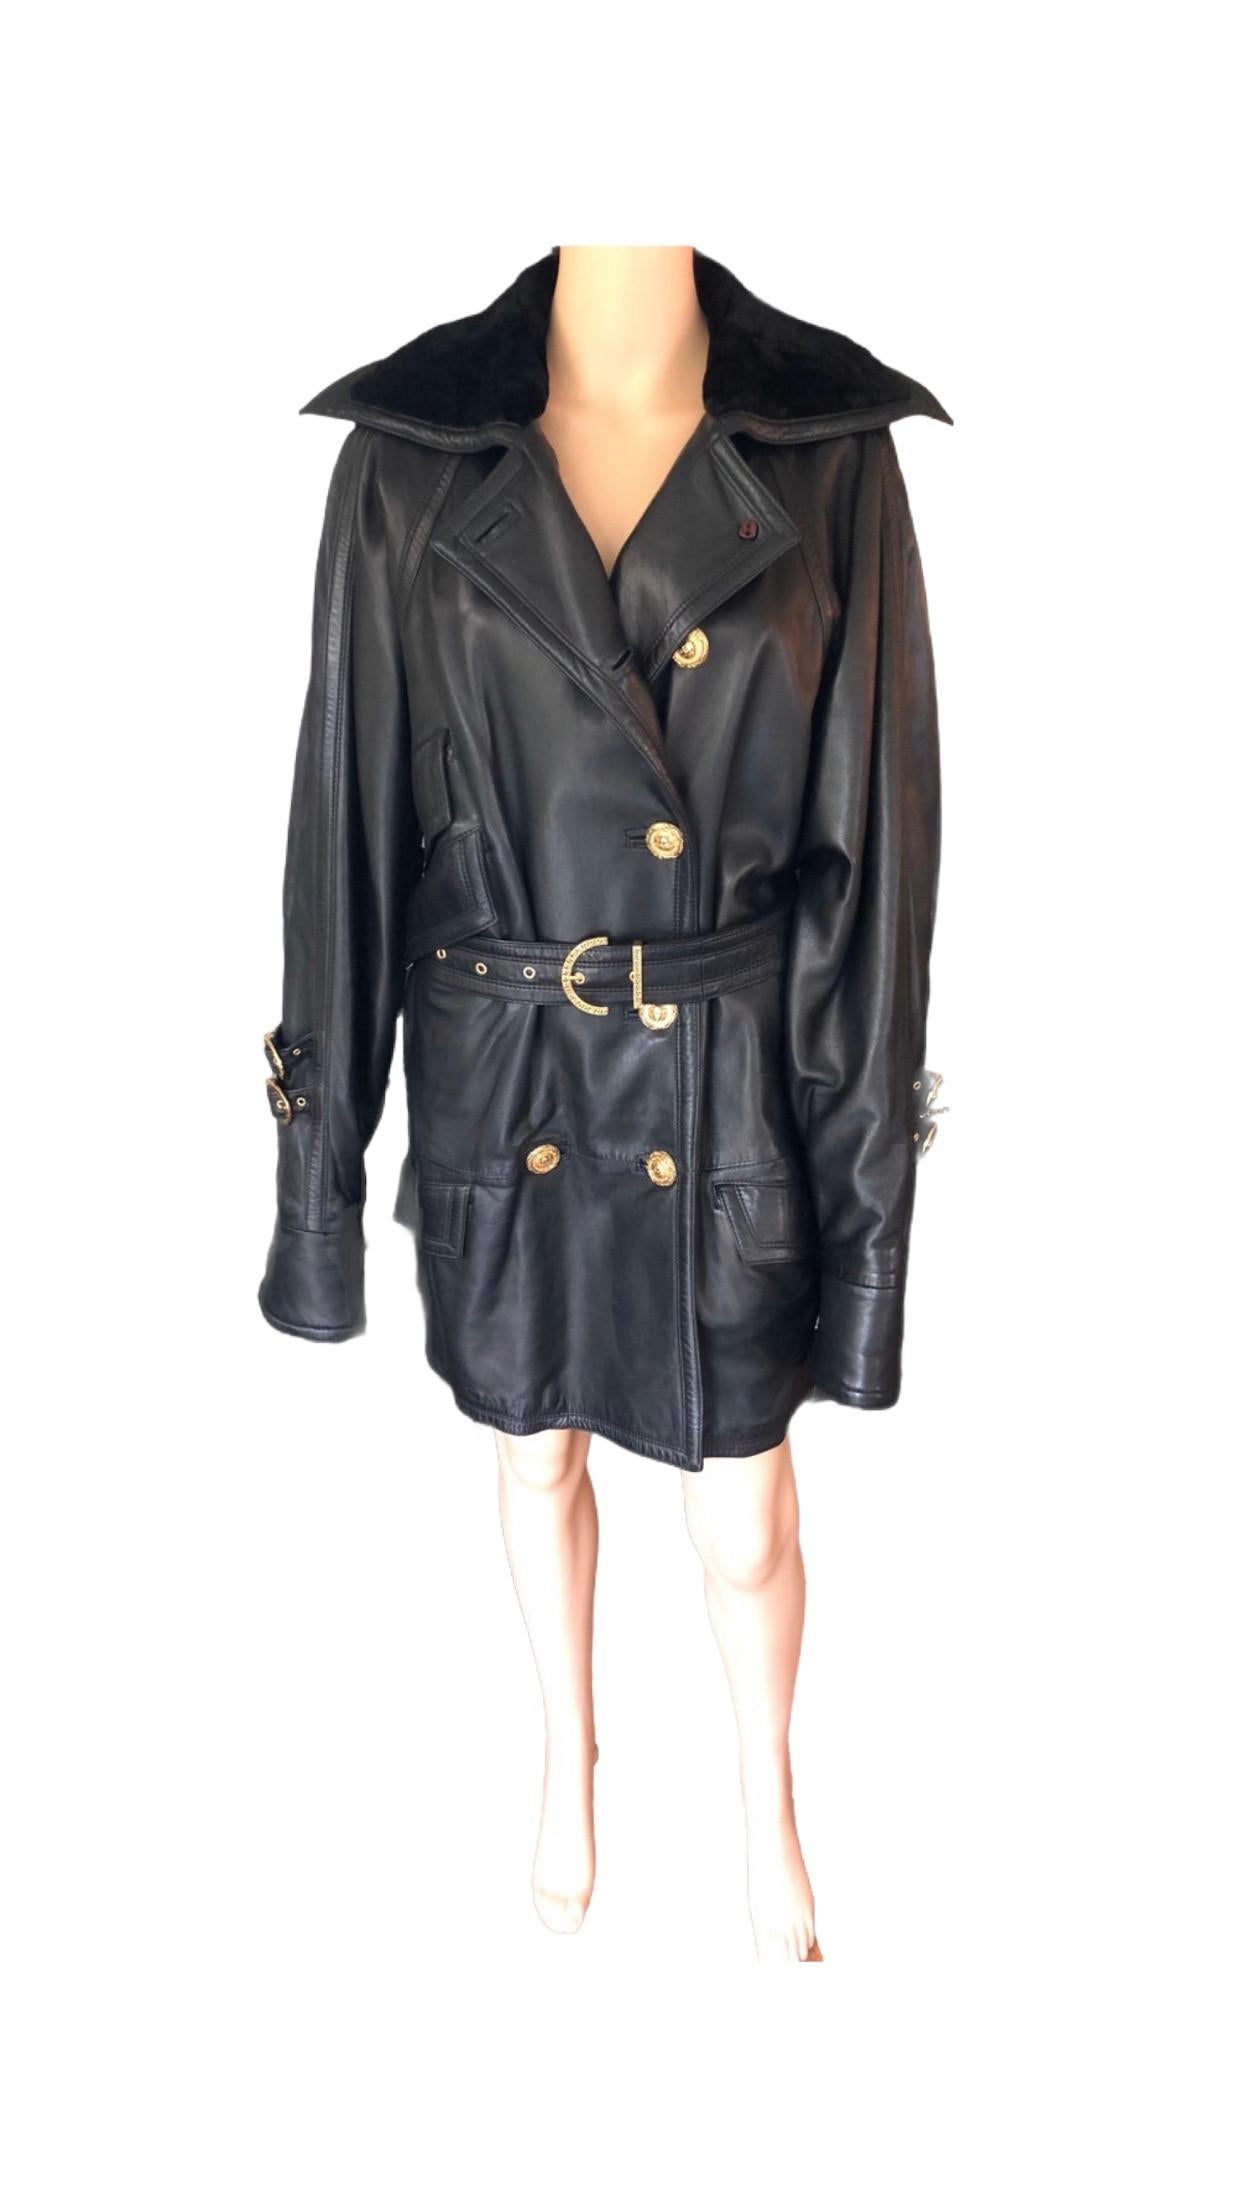 Gianni Versace c. 1990 Bondage Leather Belted Knee-Length Black Jacket Coat For Sale 3